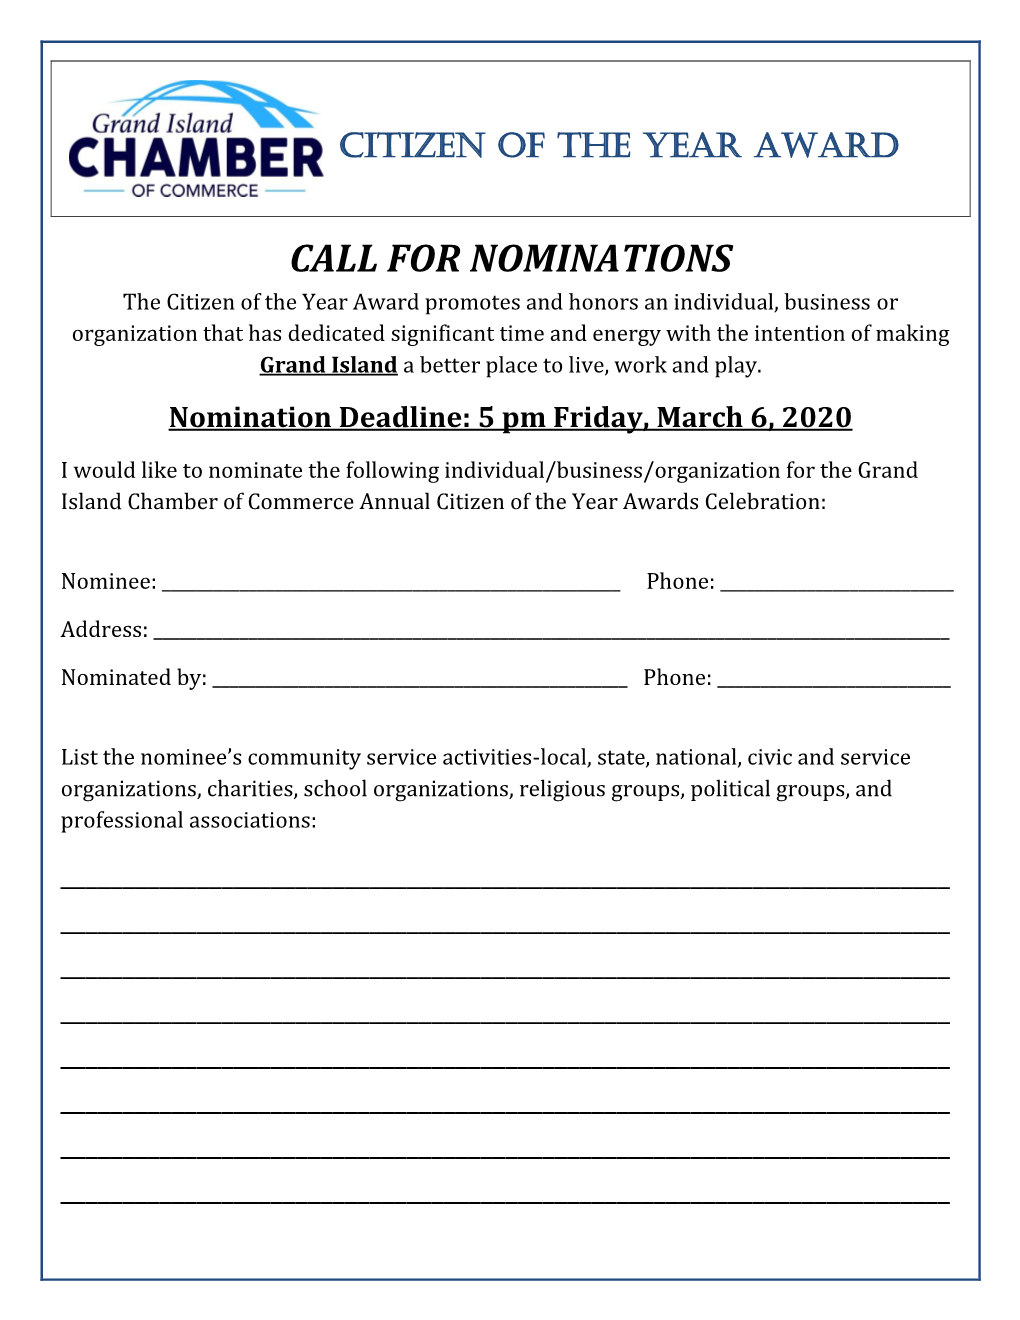 Nomination Deadline: 5 Pm Friday, March 6, 2020